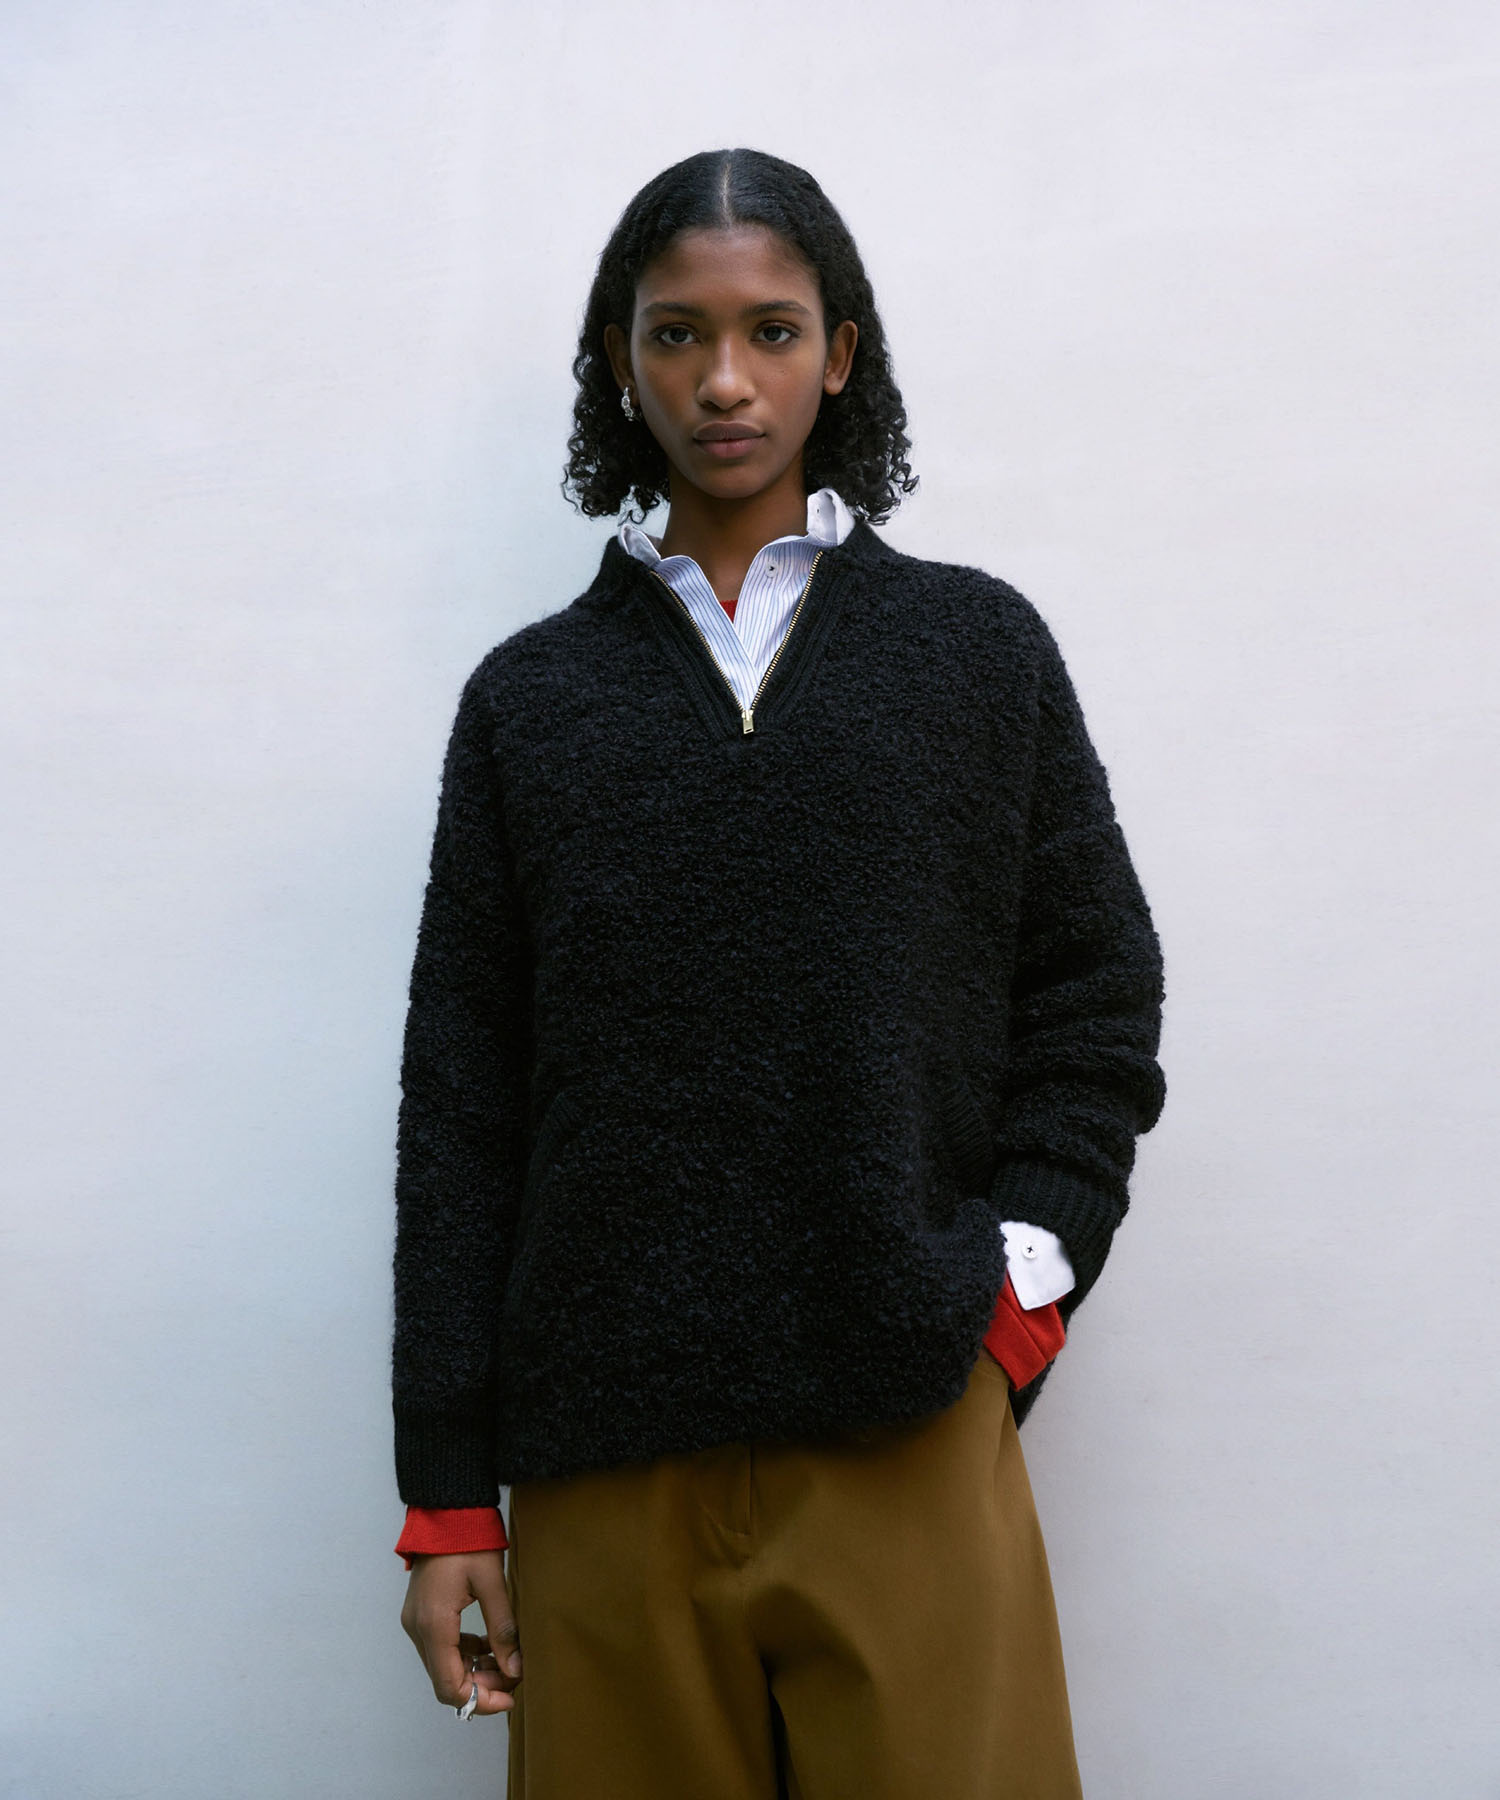 Wool / Mohair Polo Sweater (Balck)